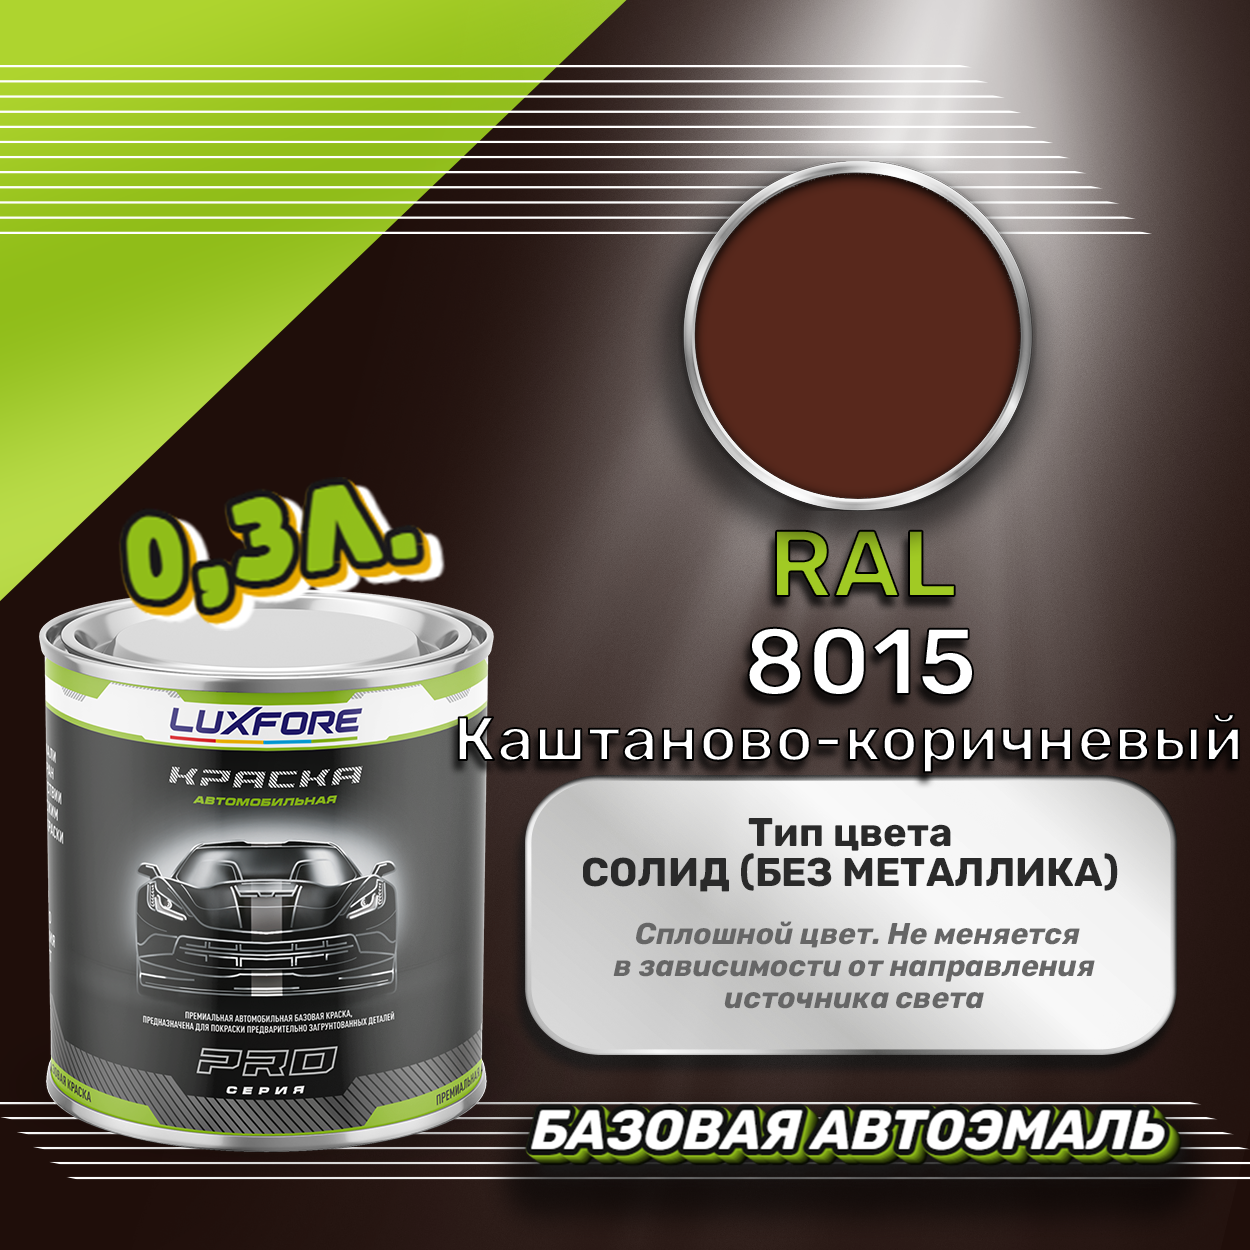 Luxfore краска базовая эмаль RAL 8015 Каштаново-коричневый 300 мл